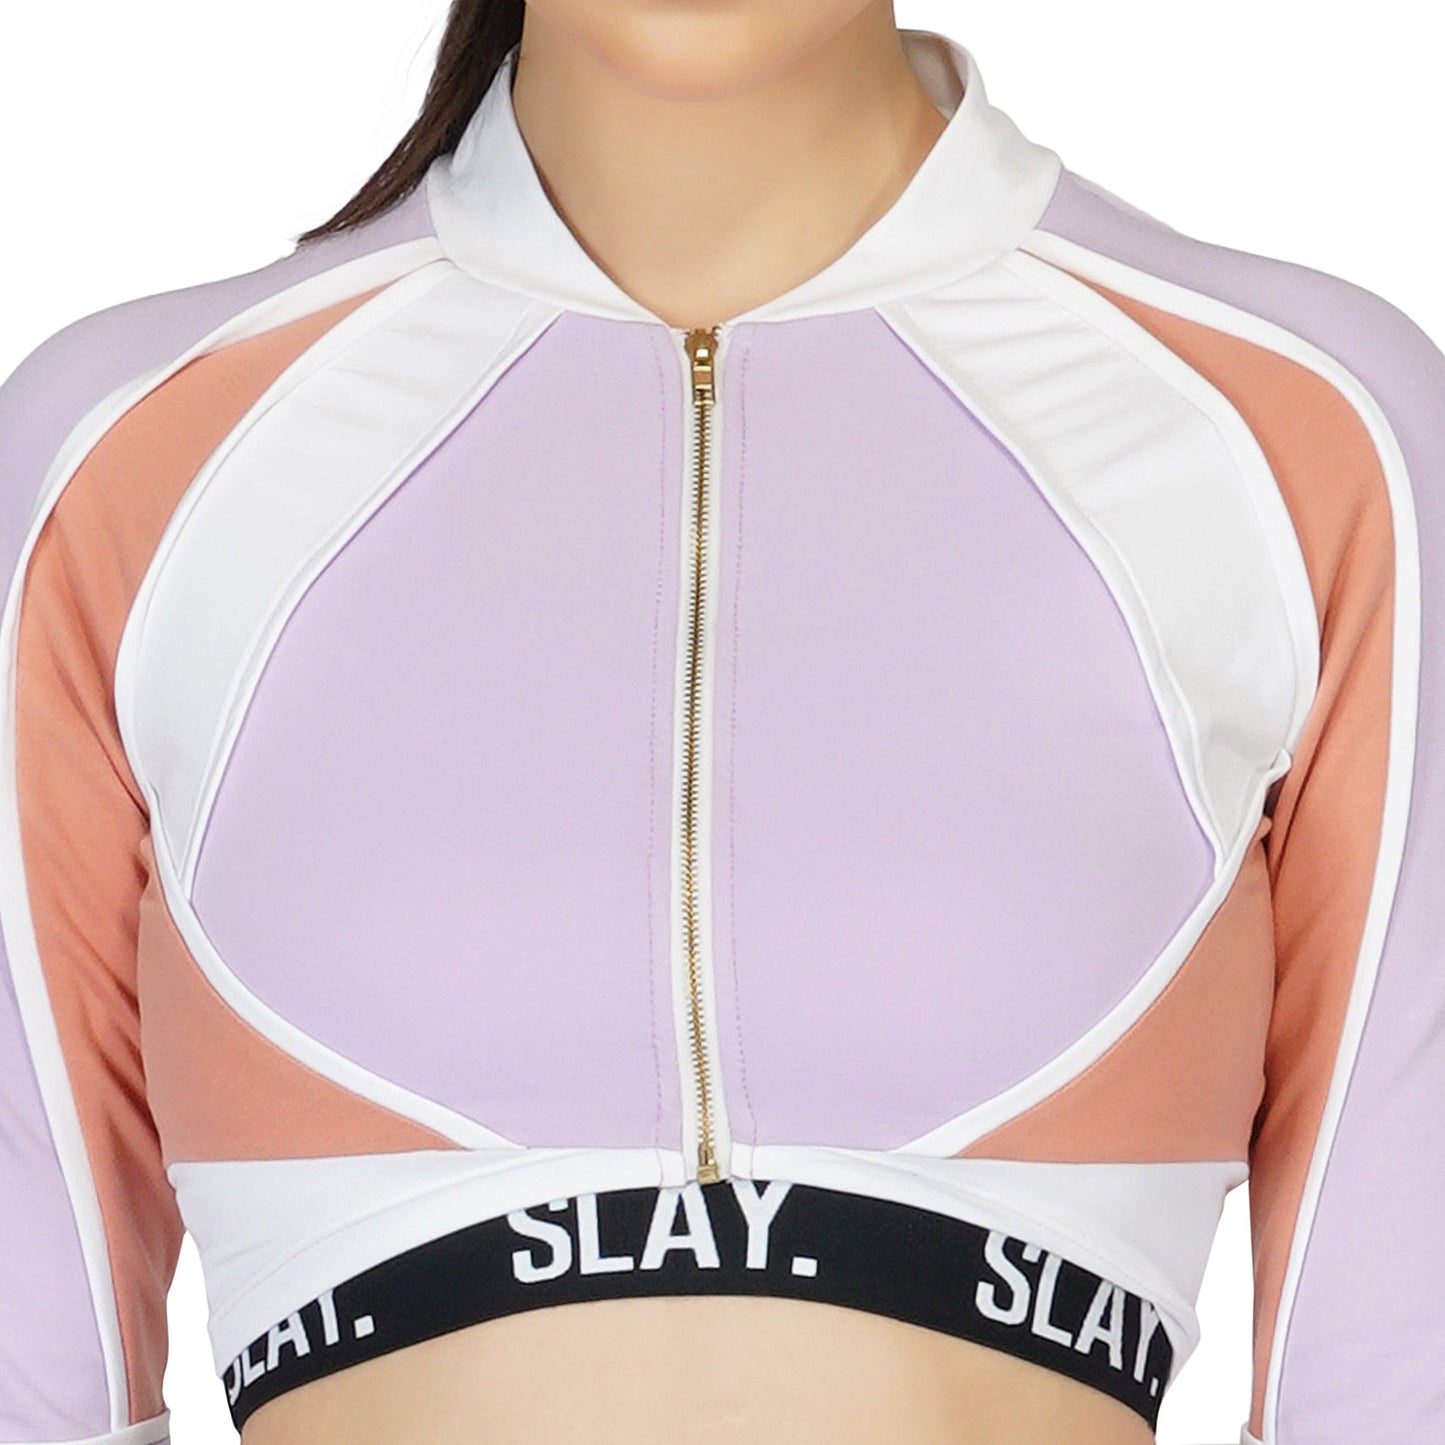 SLAY. Women's Activewear Lavender Lilac Nude White Colorblock Cargo Jogger Pants Streetwear